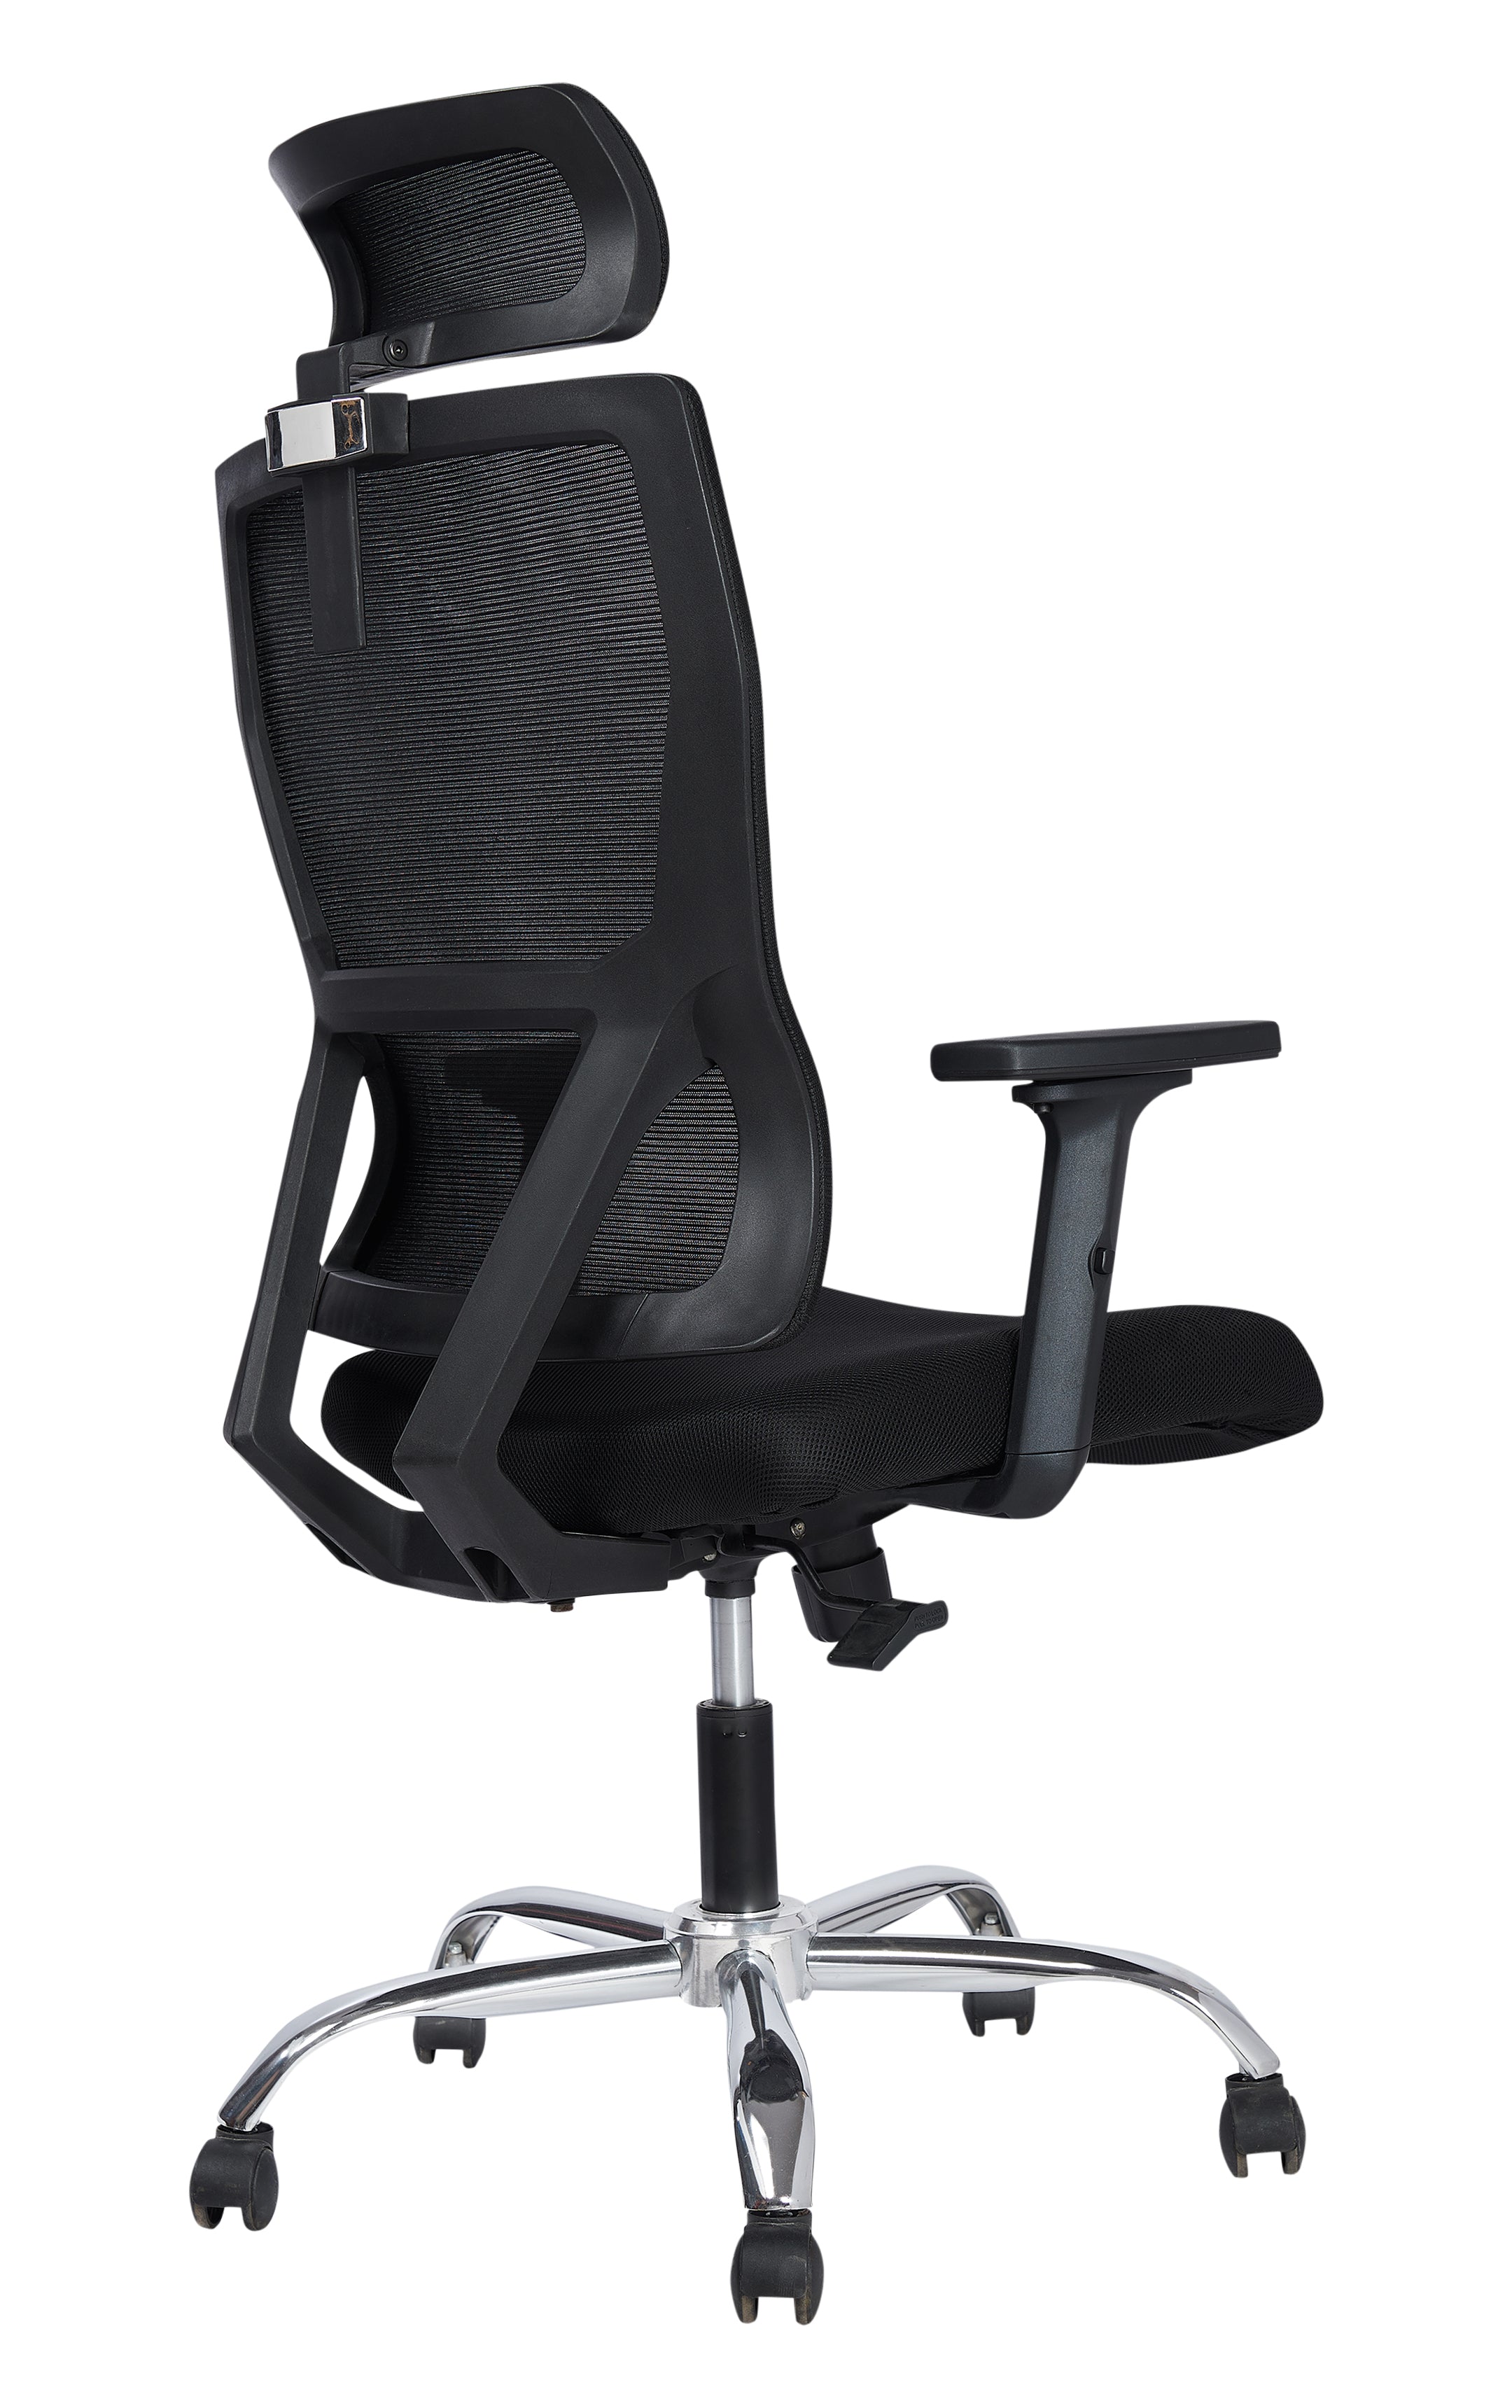 Agustin High Back Ergonomic Office Chair With Cushion Seat, 2D Armrest And Chrome Base with Nylon Castors- Black